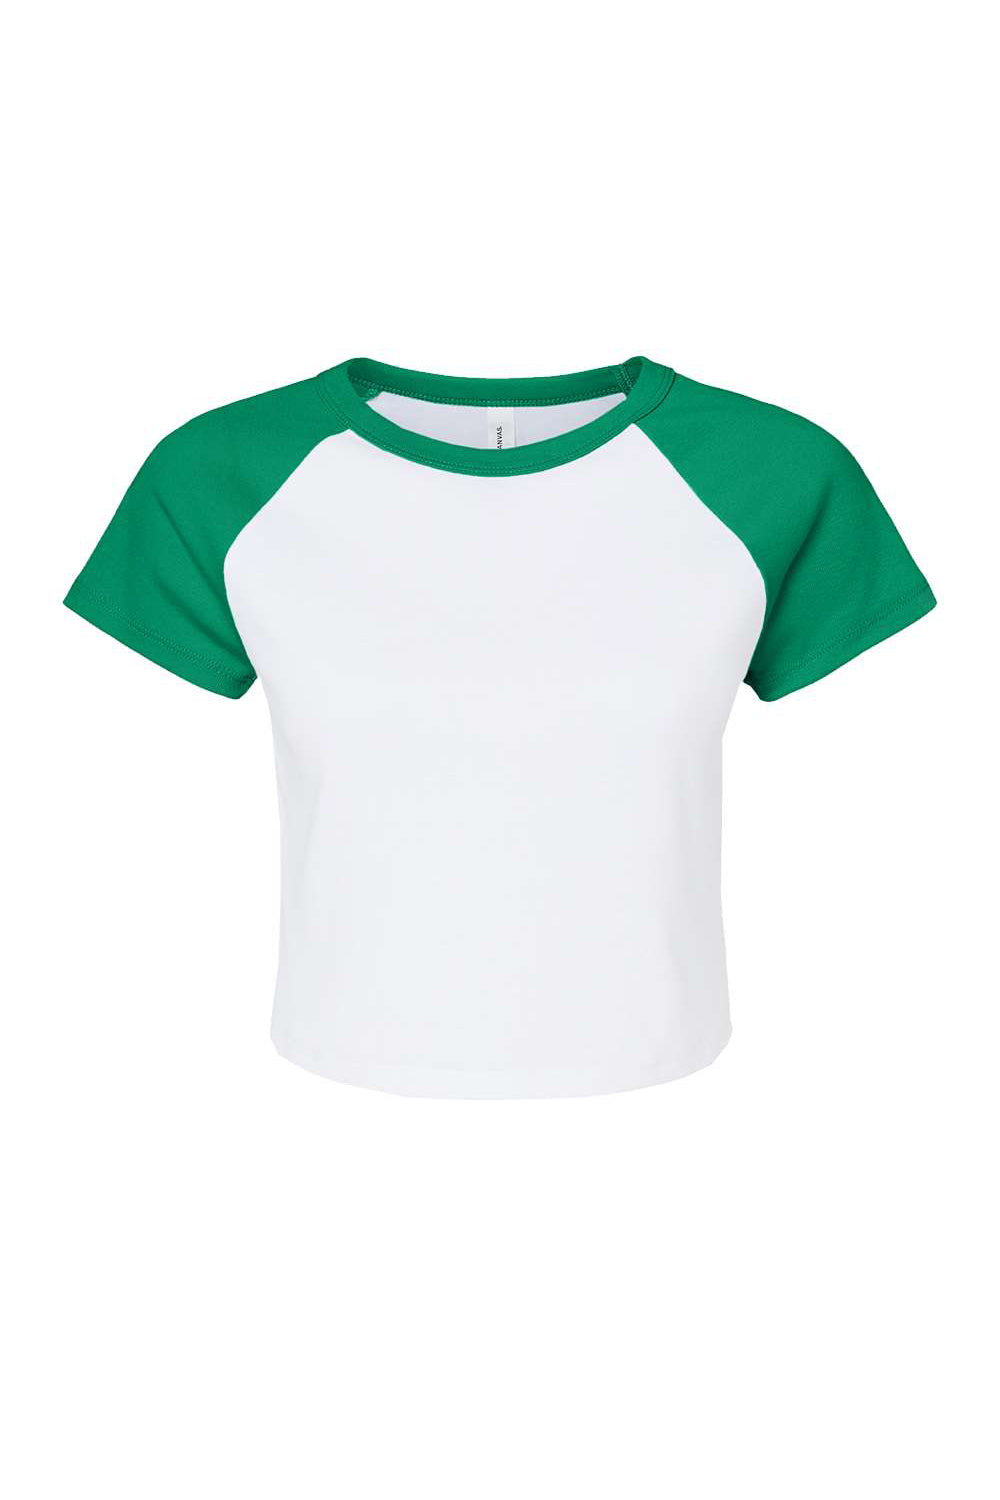 Bella + Canvas 1201 Womens Micro Ribbed Raglan Short Sleeve Crewneck Baby T-Shirt White/Kelly Green Flat Front